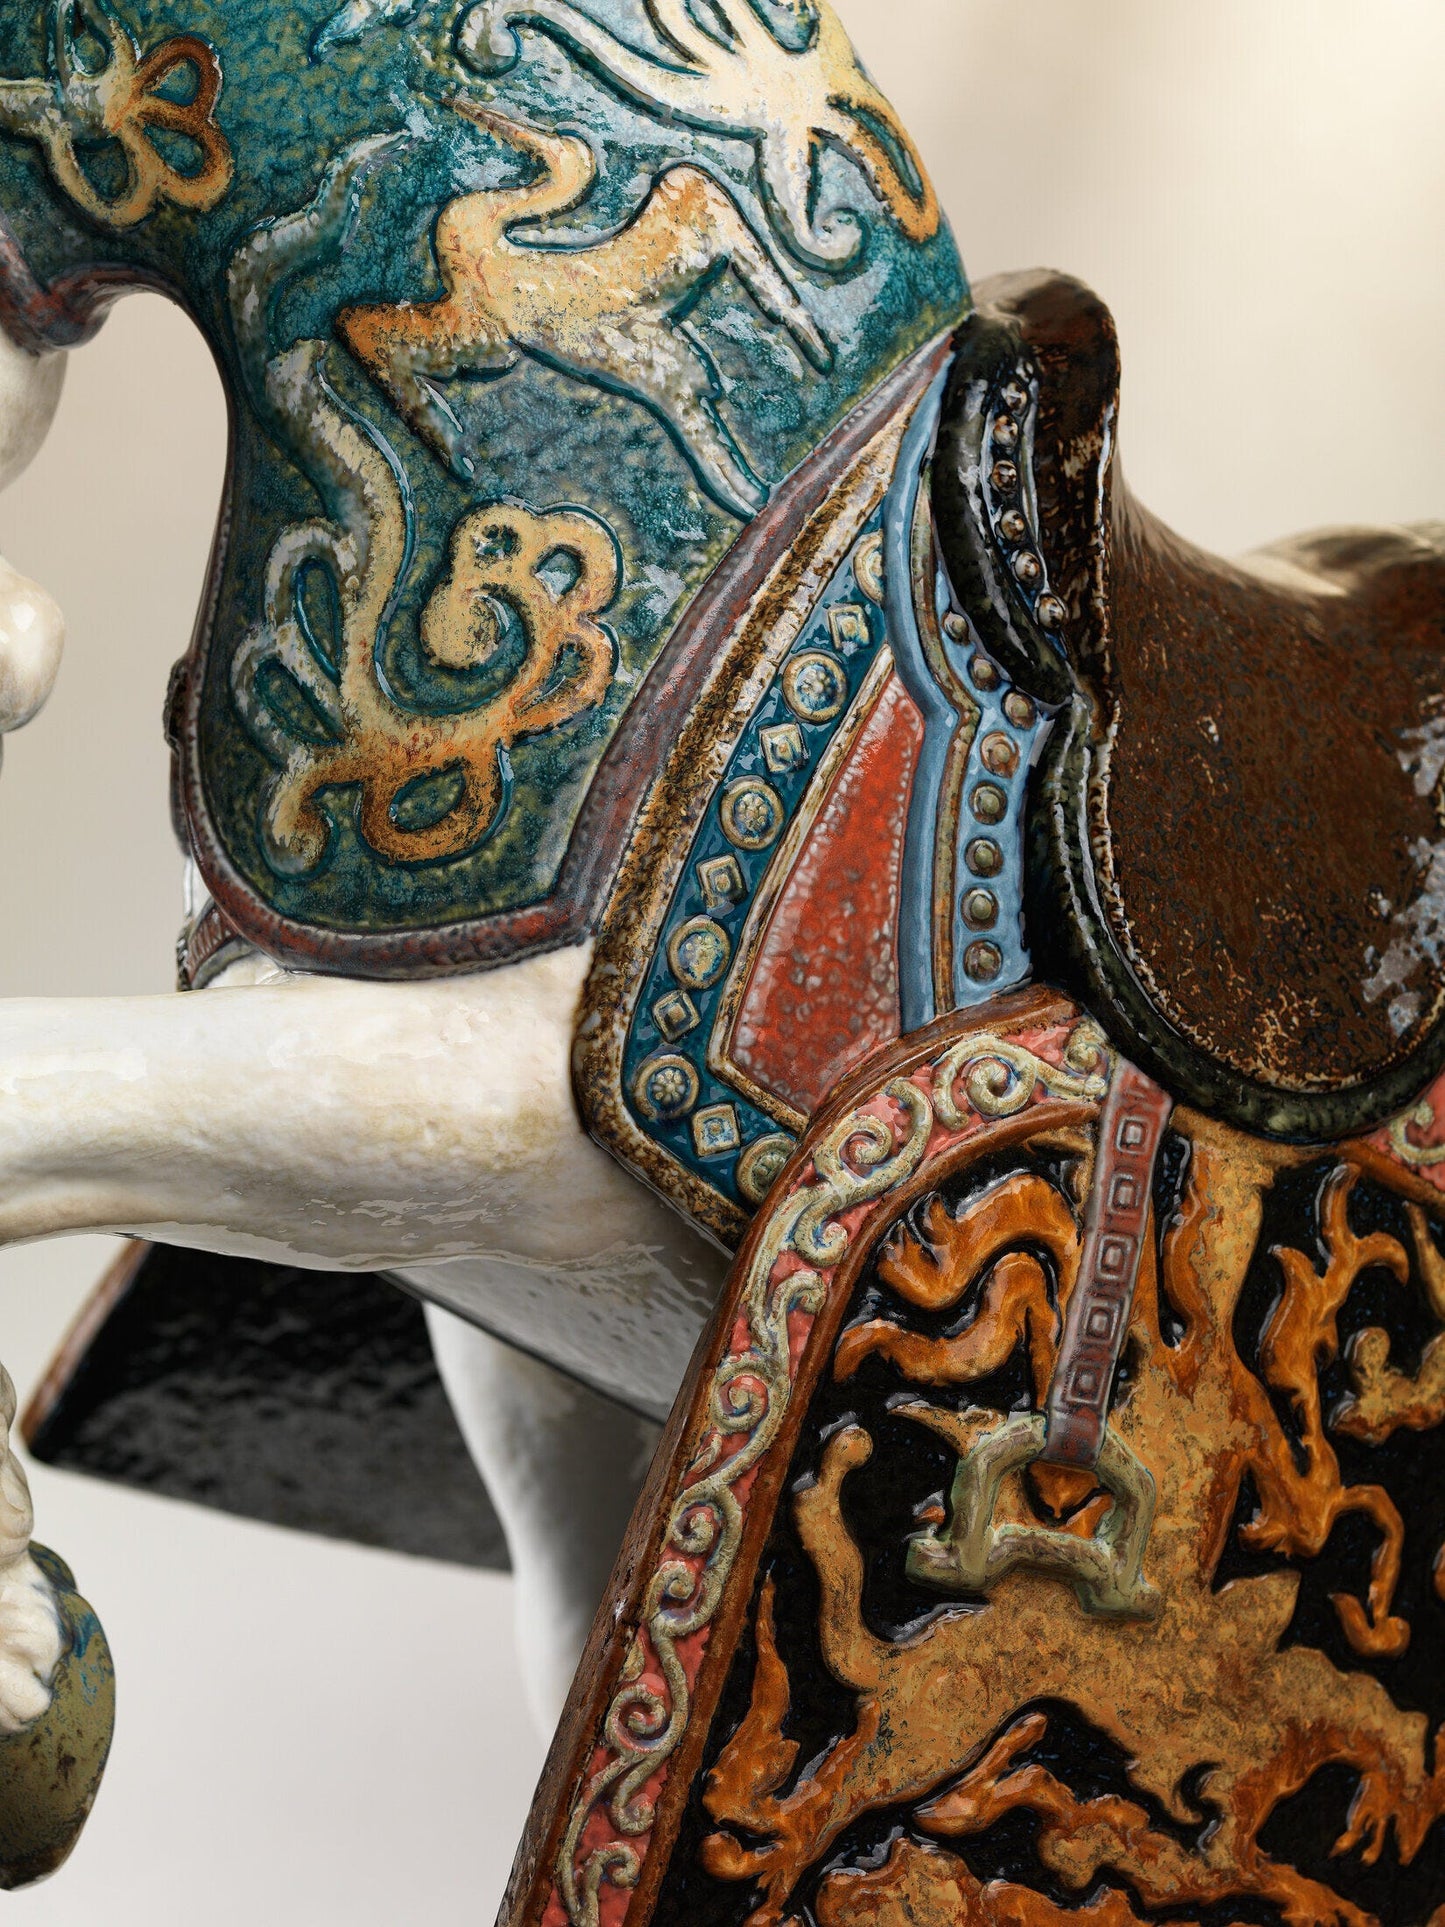 Oriental Horse Sculpture Glazed Limited Edition